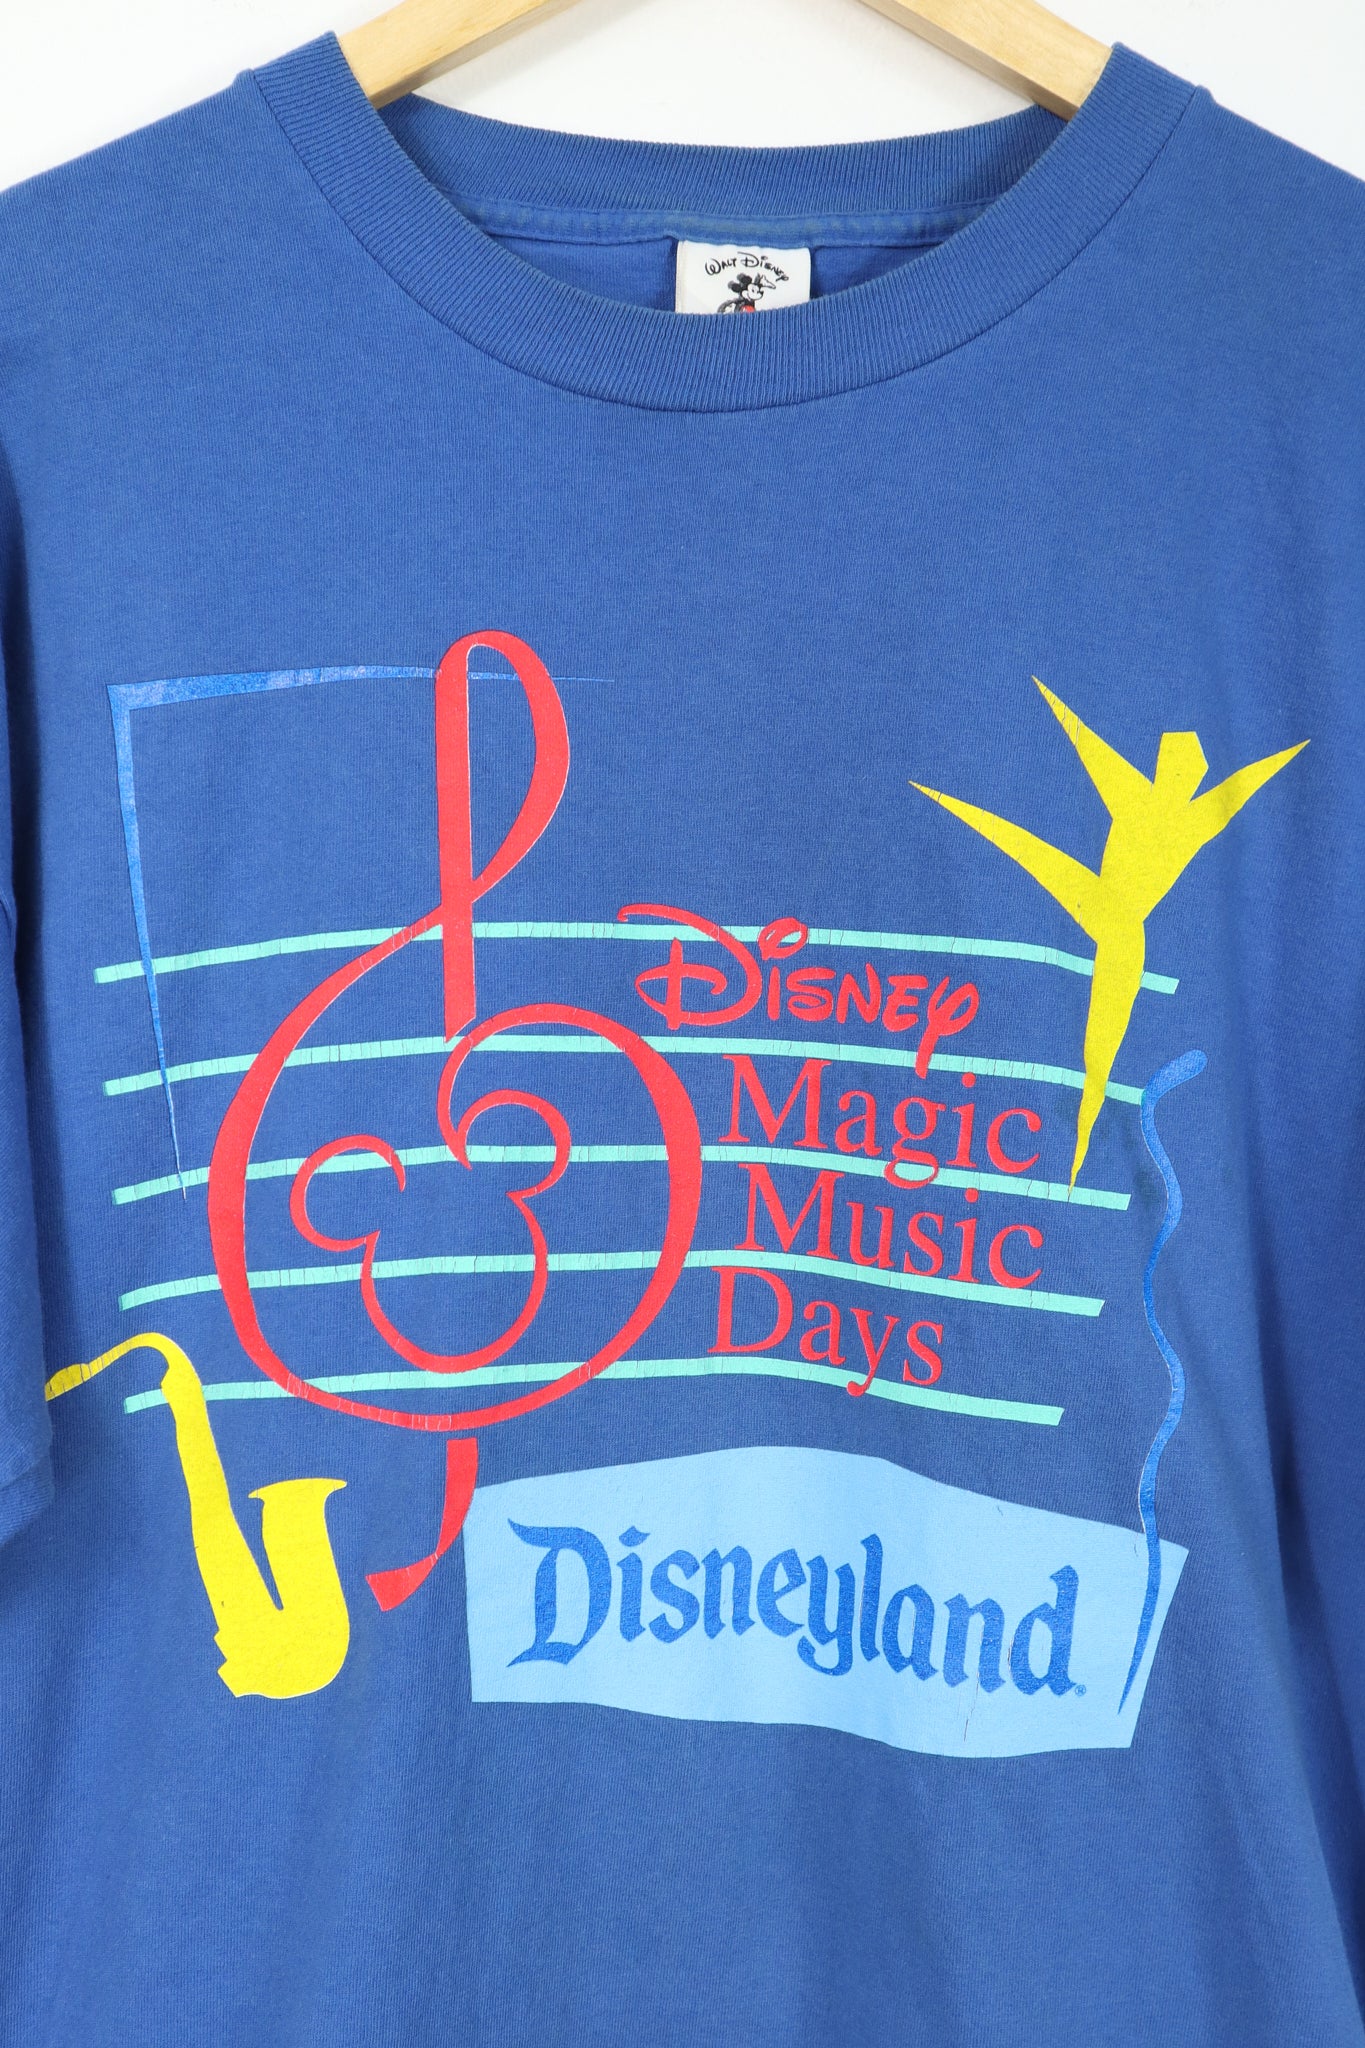 Vintage Disney Magic Music Days Tee